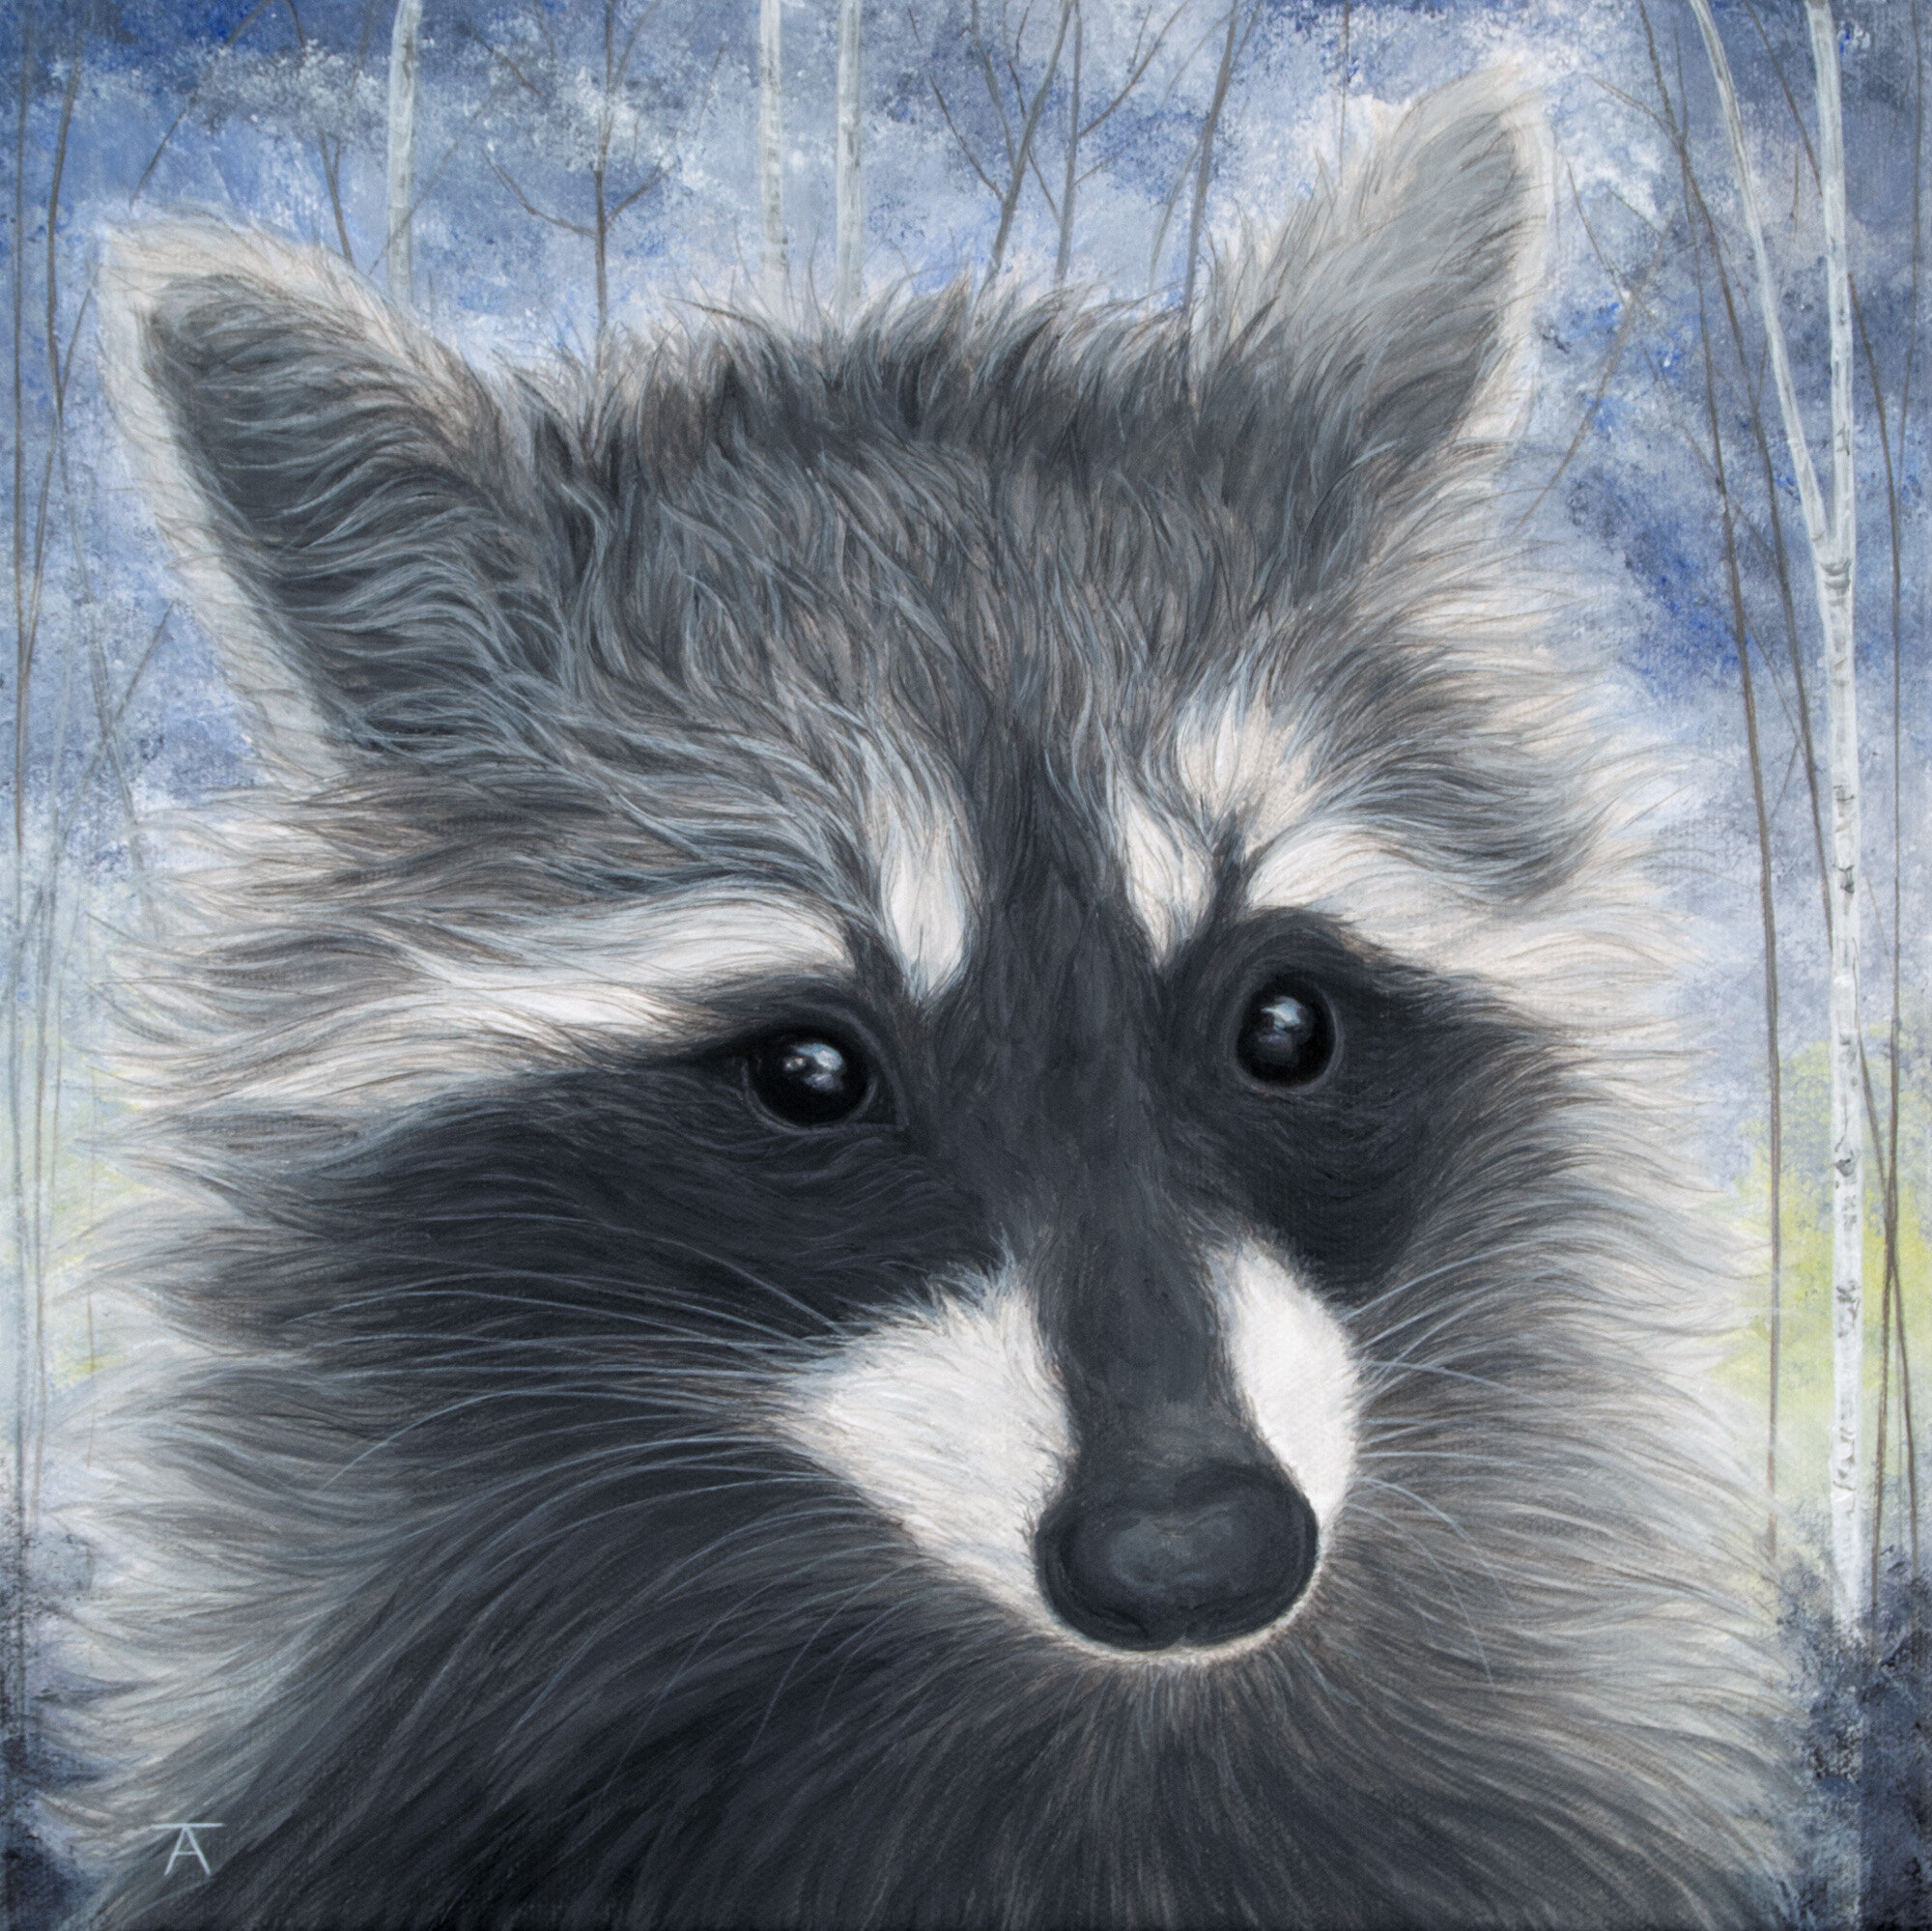 rocky raccoon - sold